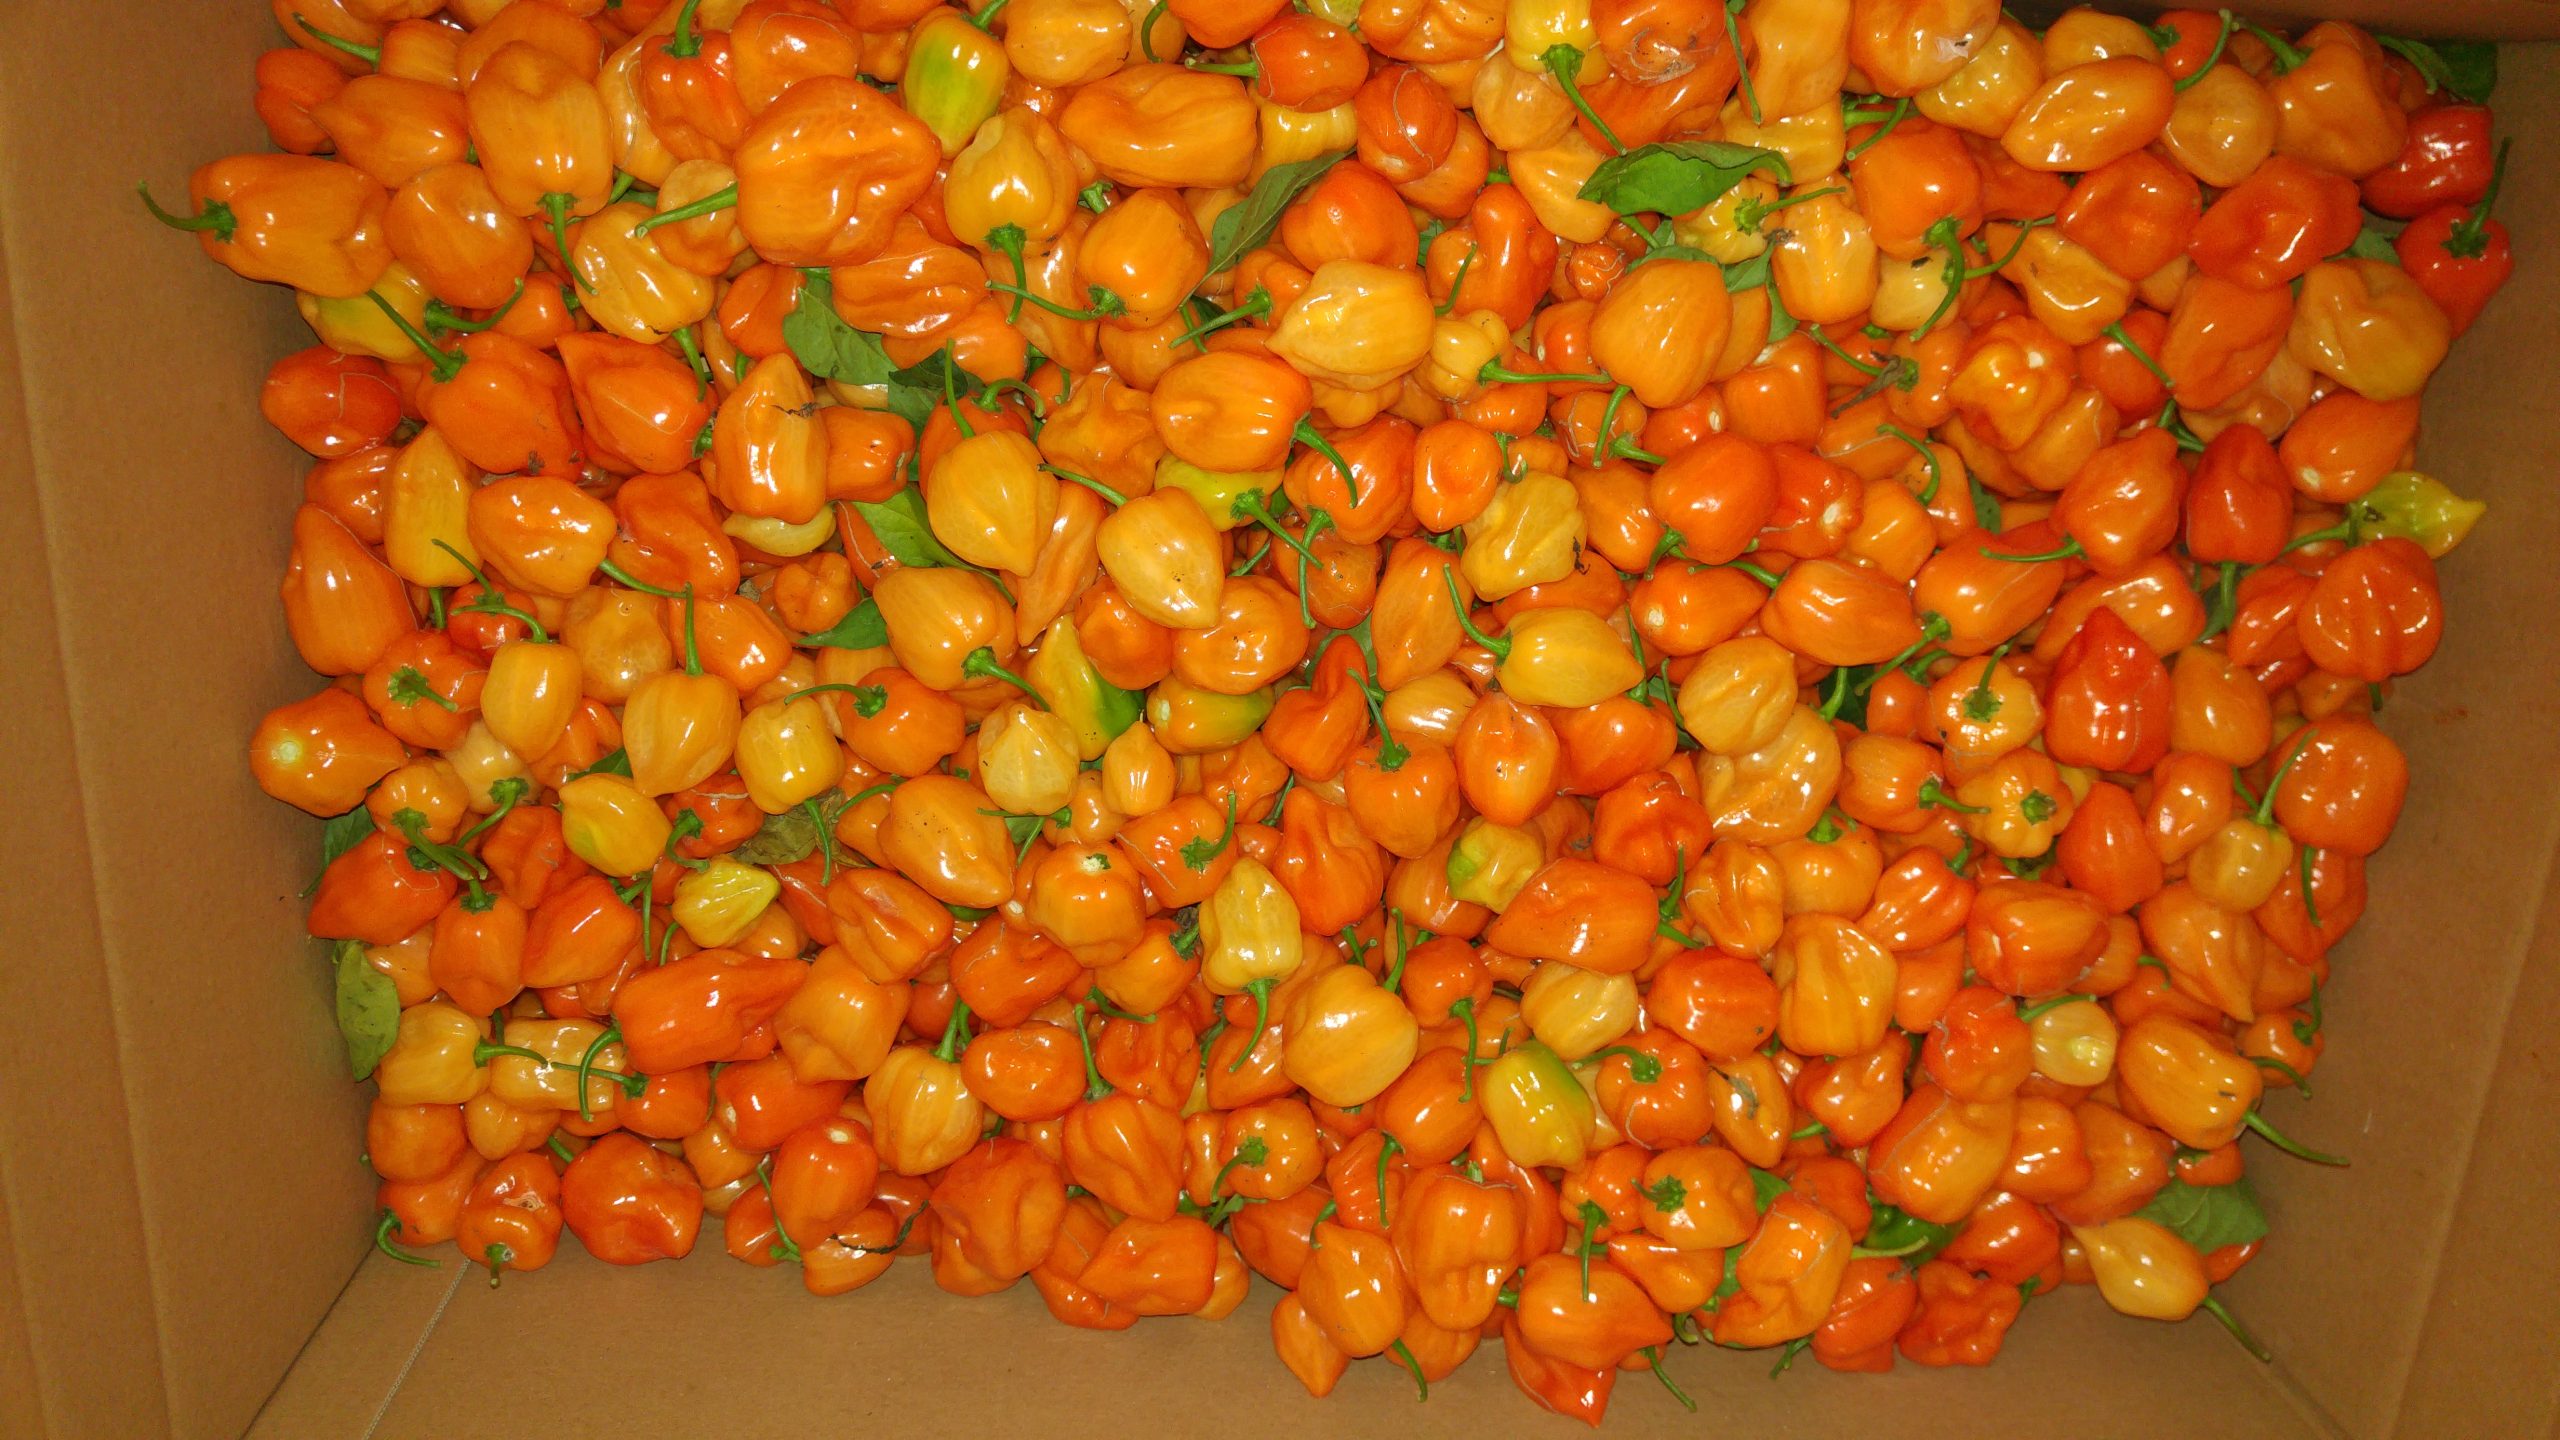 Picture of a box full of Orange Habanero